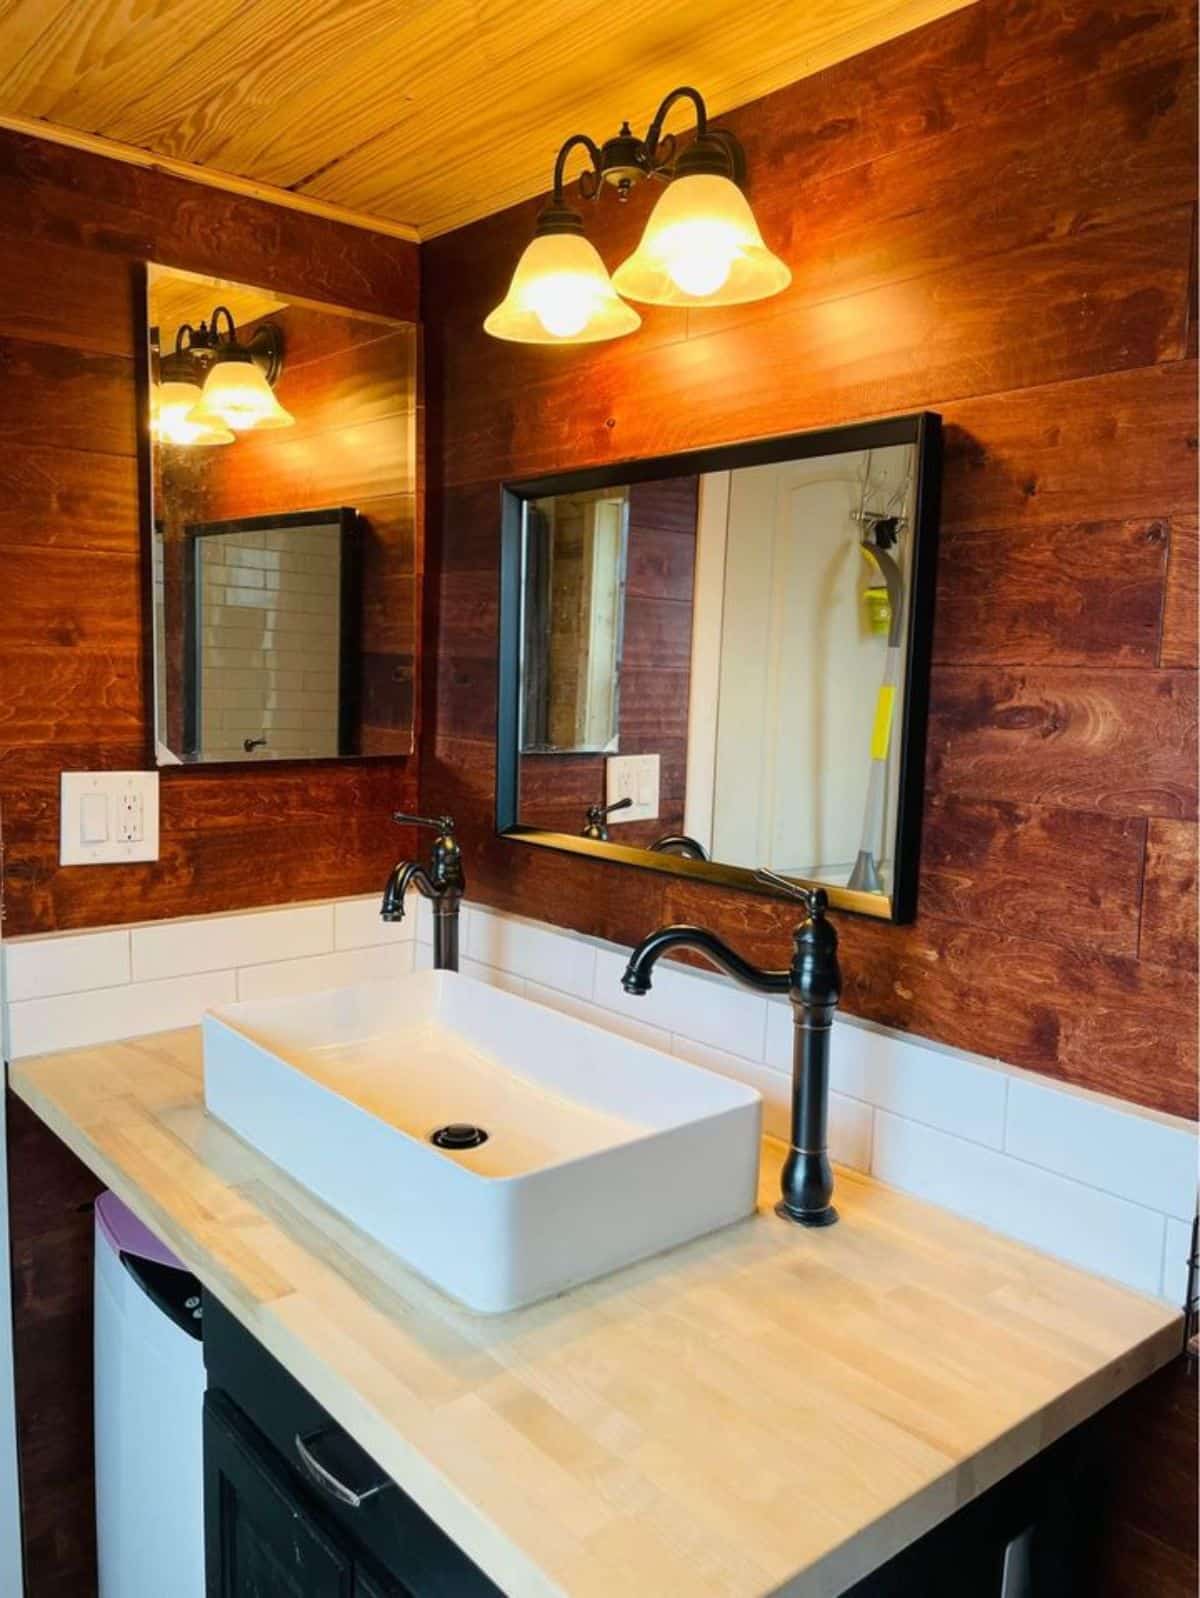 standard toilet, sink with vanity and mirror in bathroom